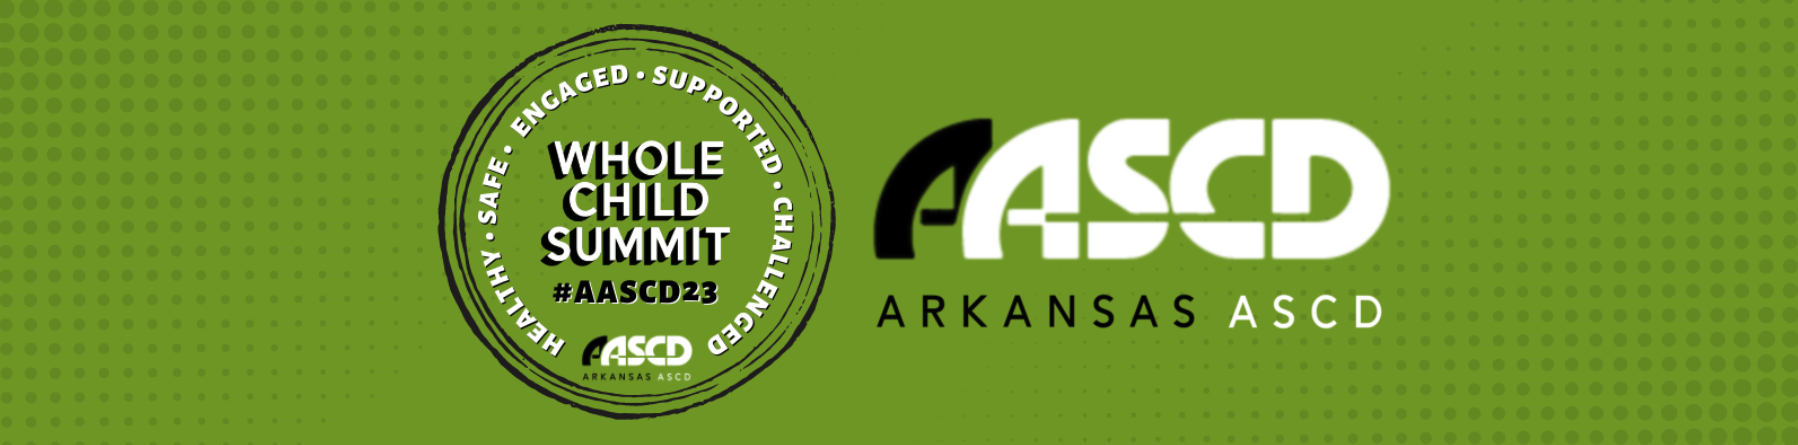 Arkansas ASCD Whole Child Summit graphic